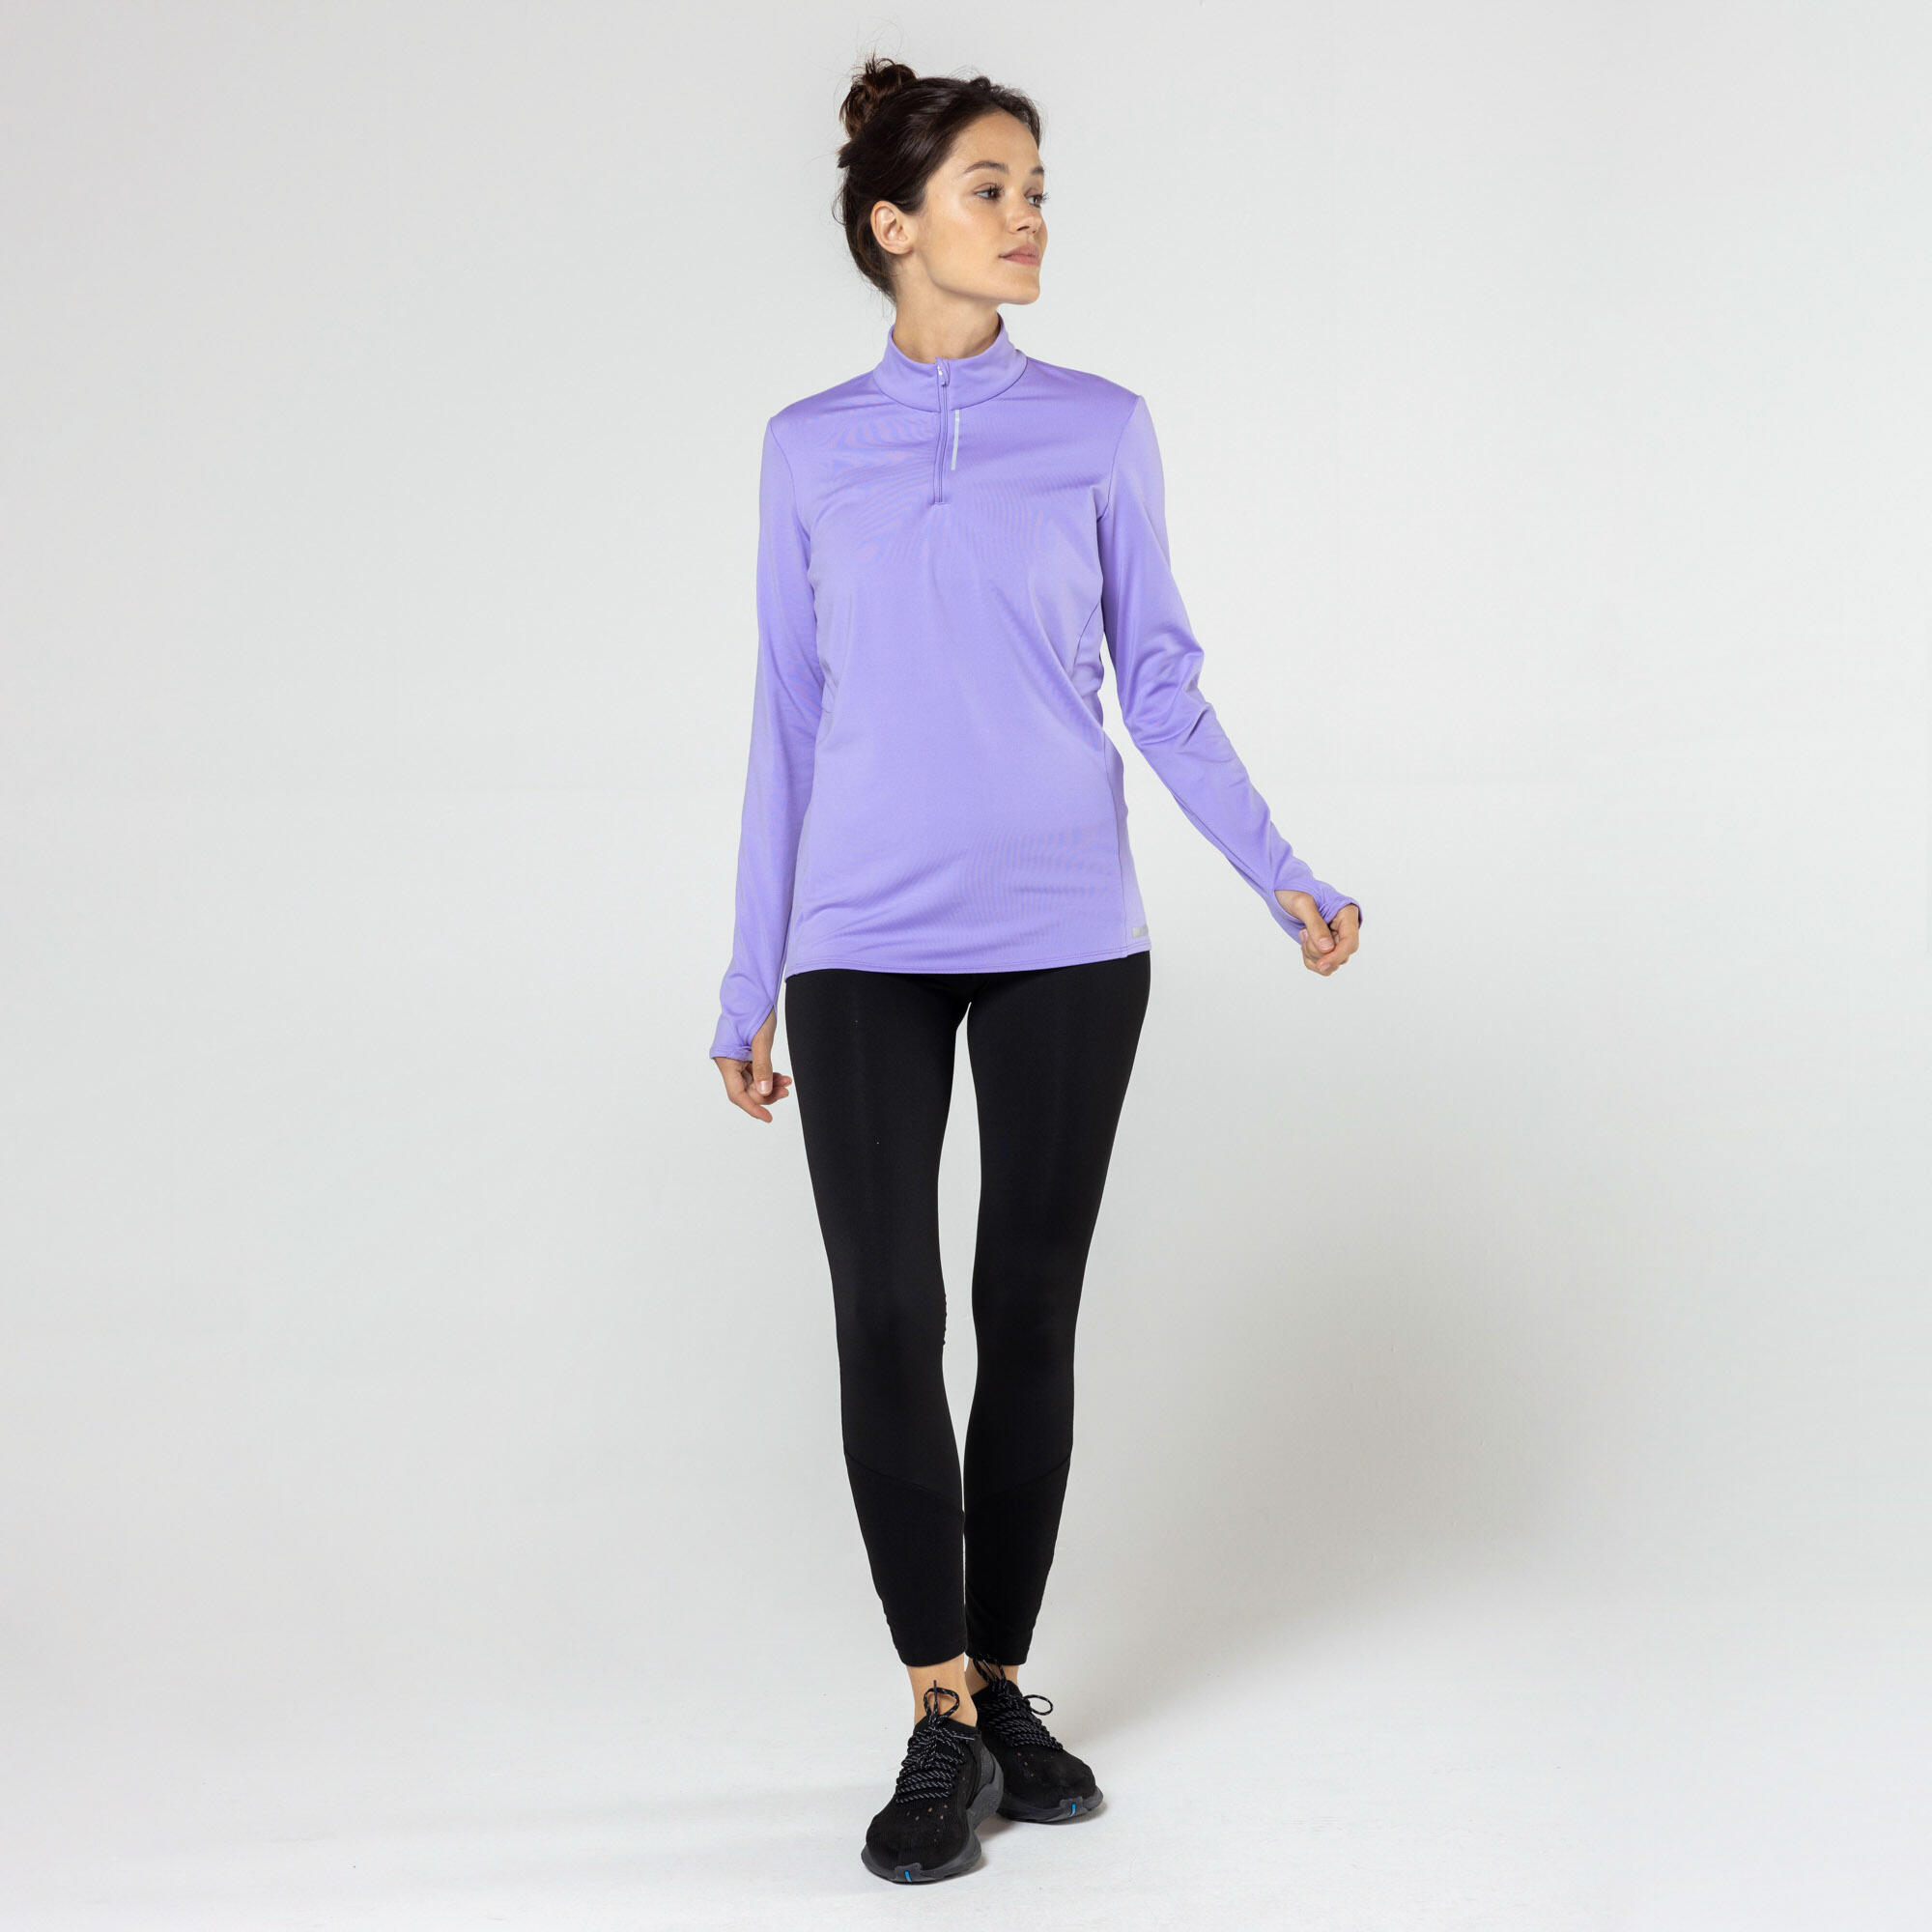 Zip Warm women's long-sleeved running T-shirt - purple 5/6